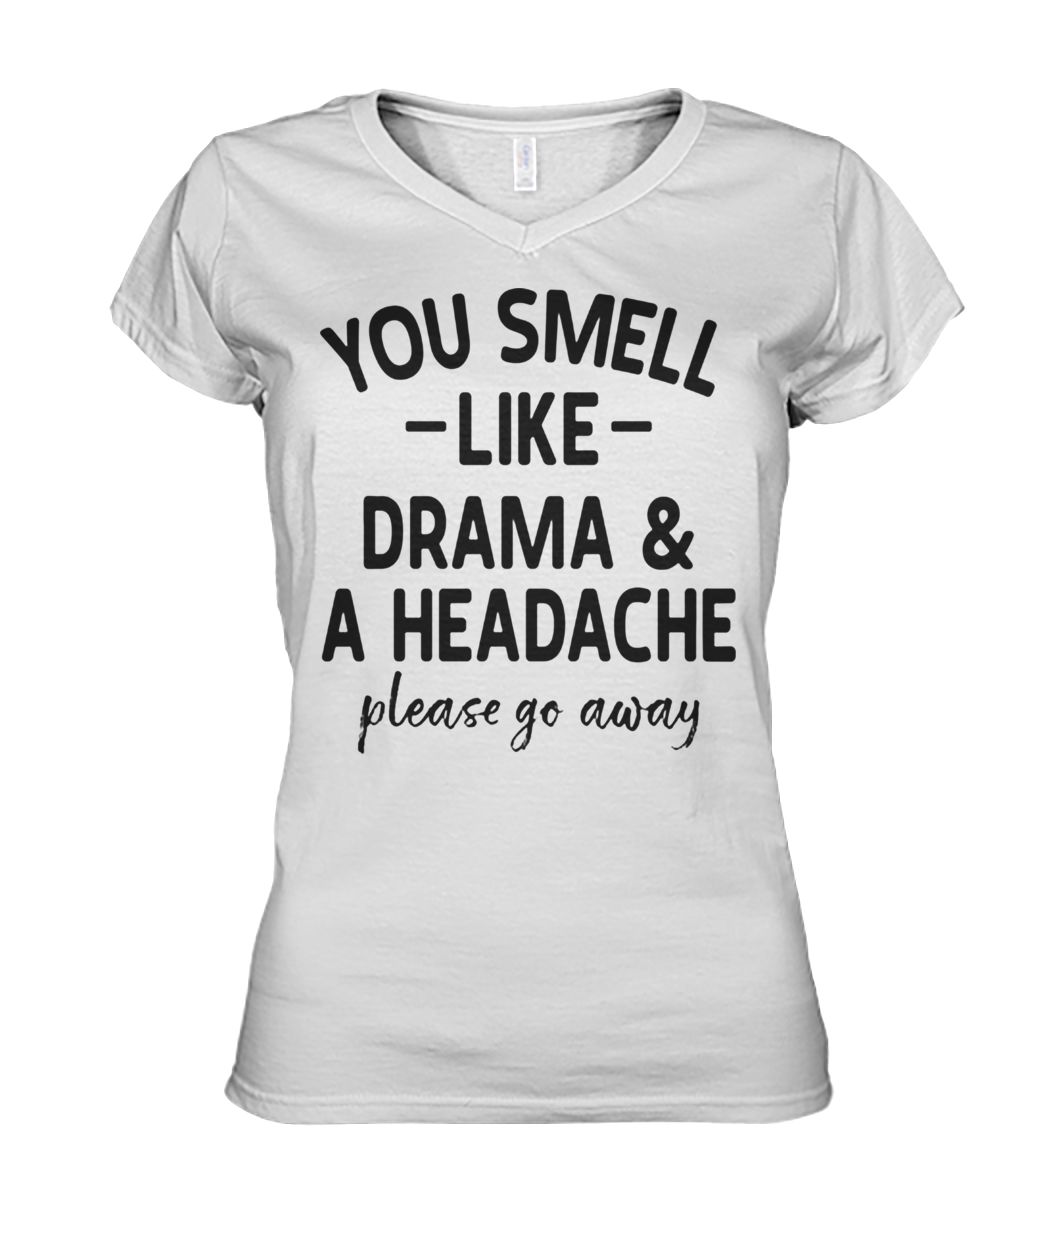 You smell like drama and a headache please go away women's v-neck